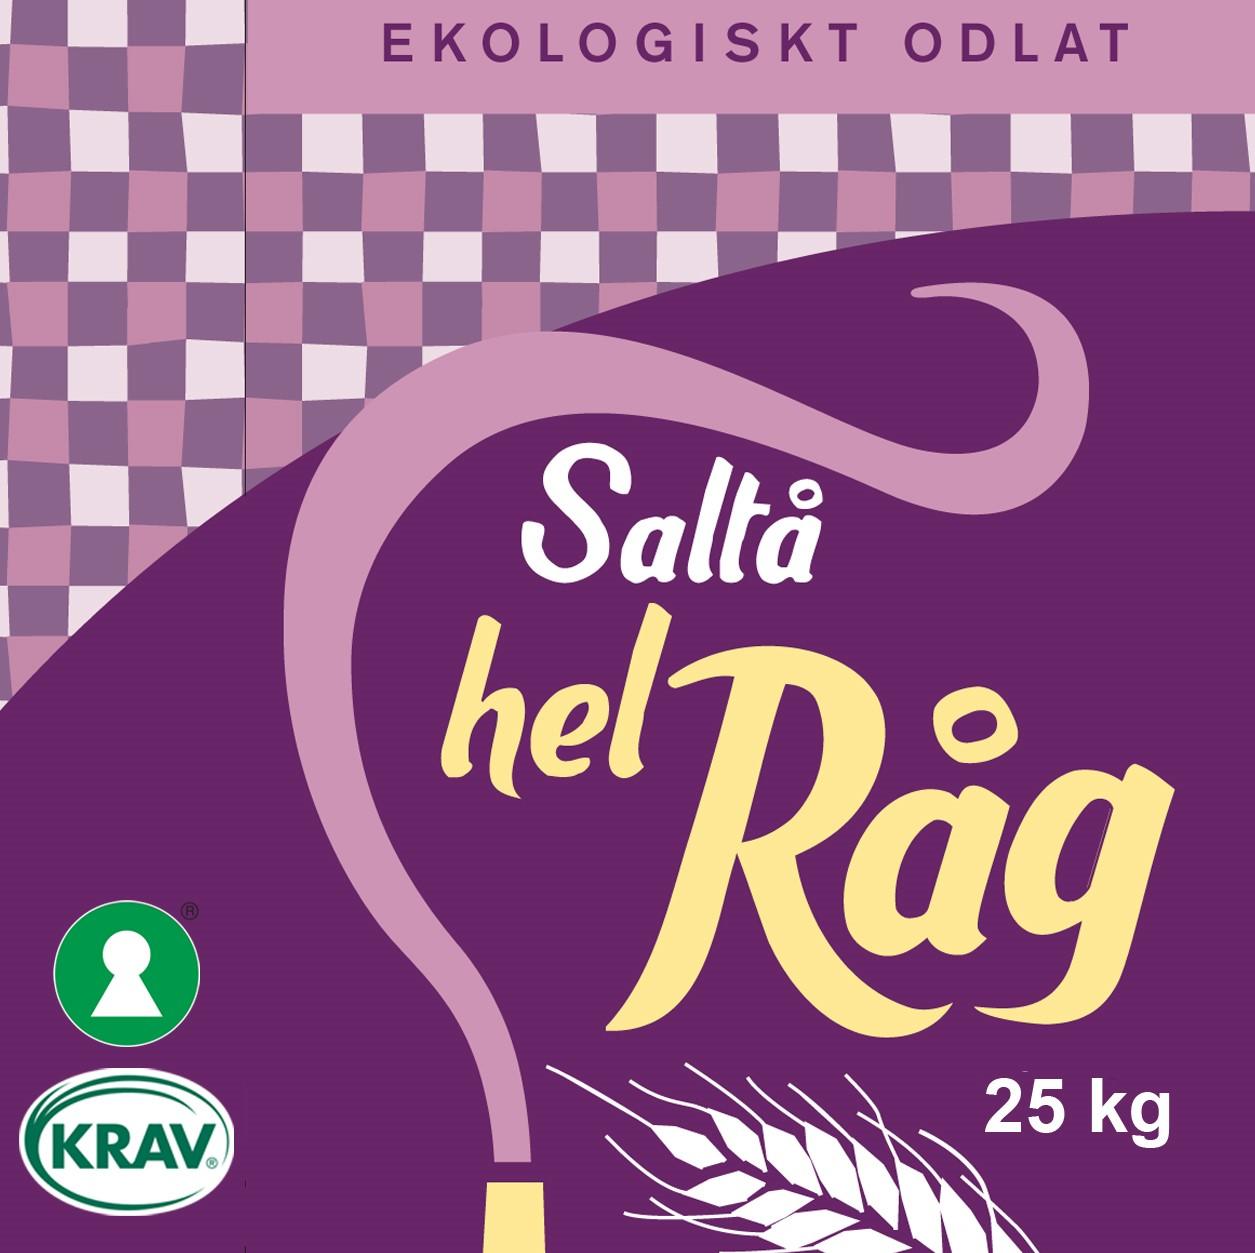 Saltå Kvarn's Hel råg'